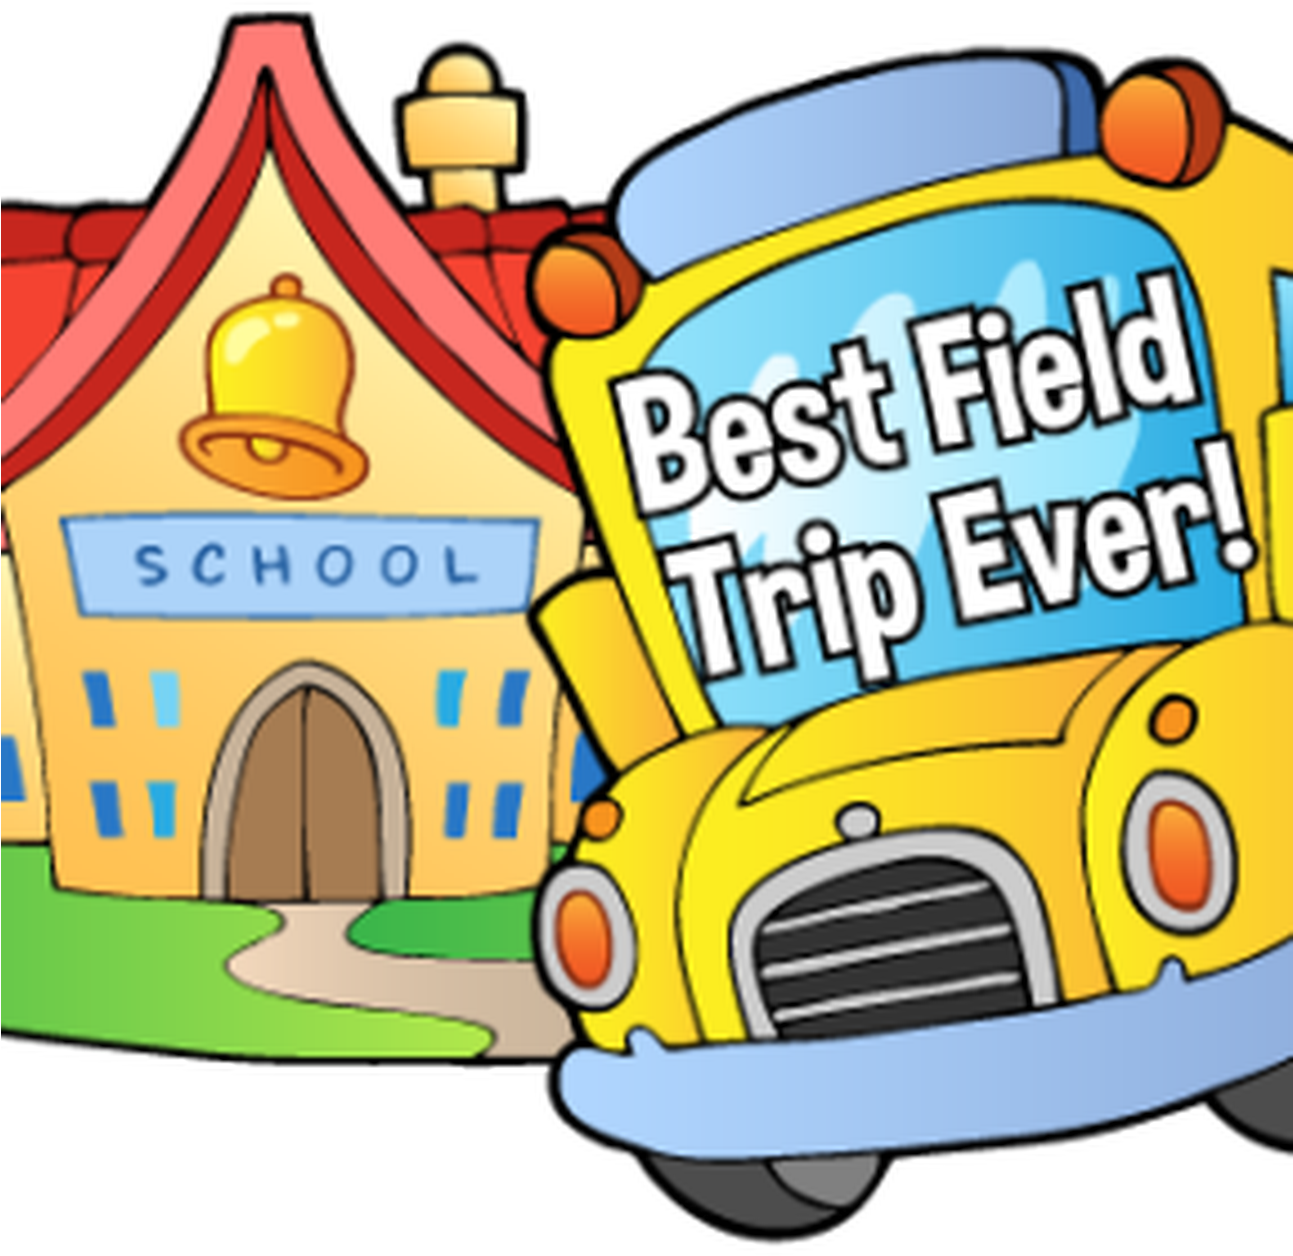 Best Field Trip Ever School Bus Cartoon